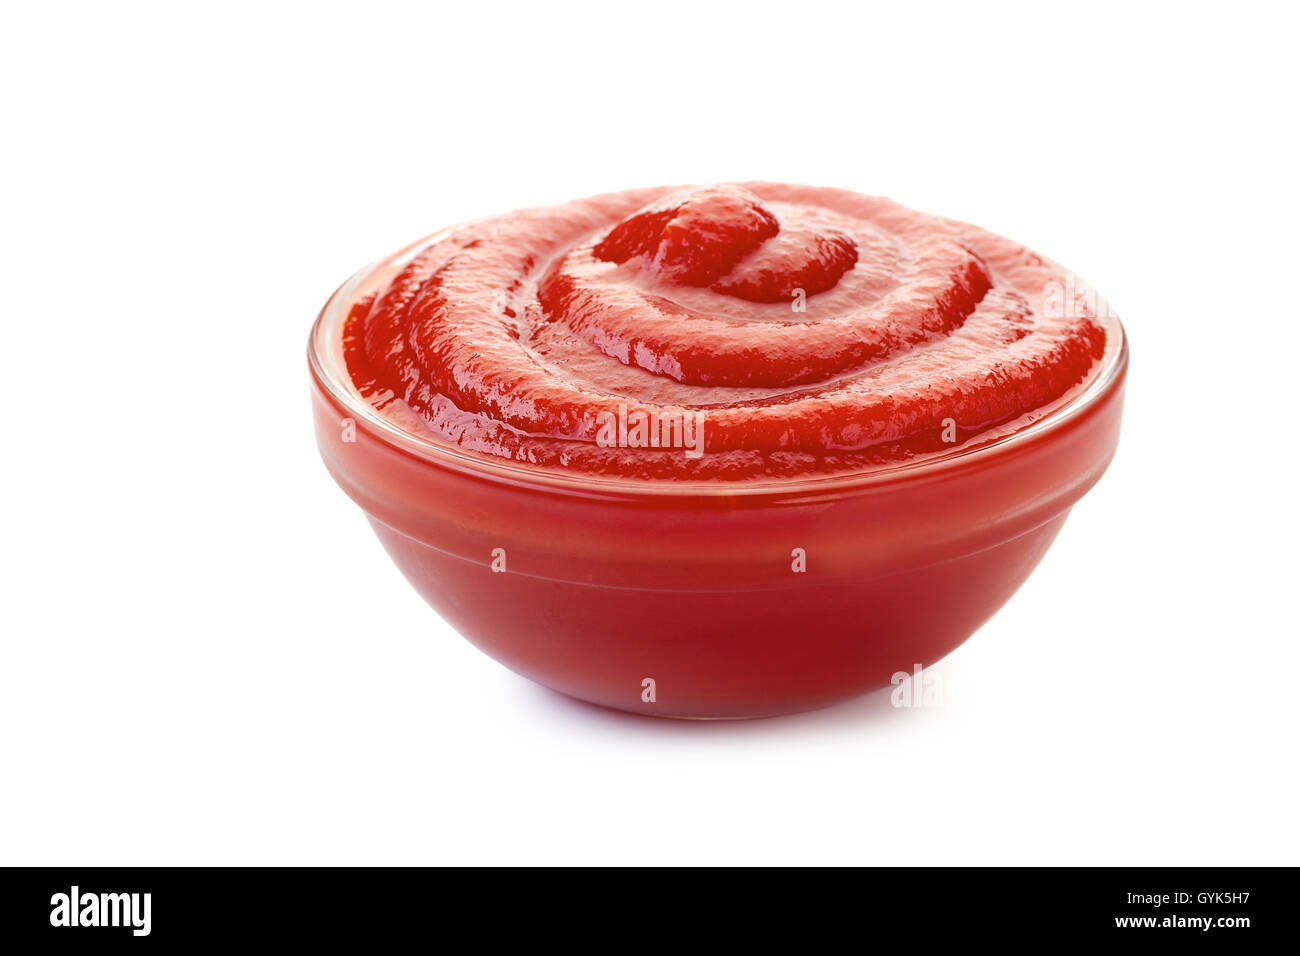 Recipiente de ketchup o salsa de tomate sobre blanco Foto de stock